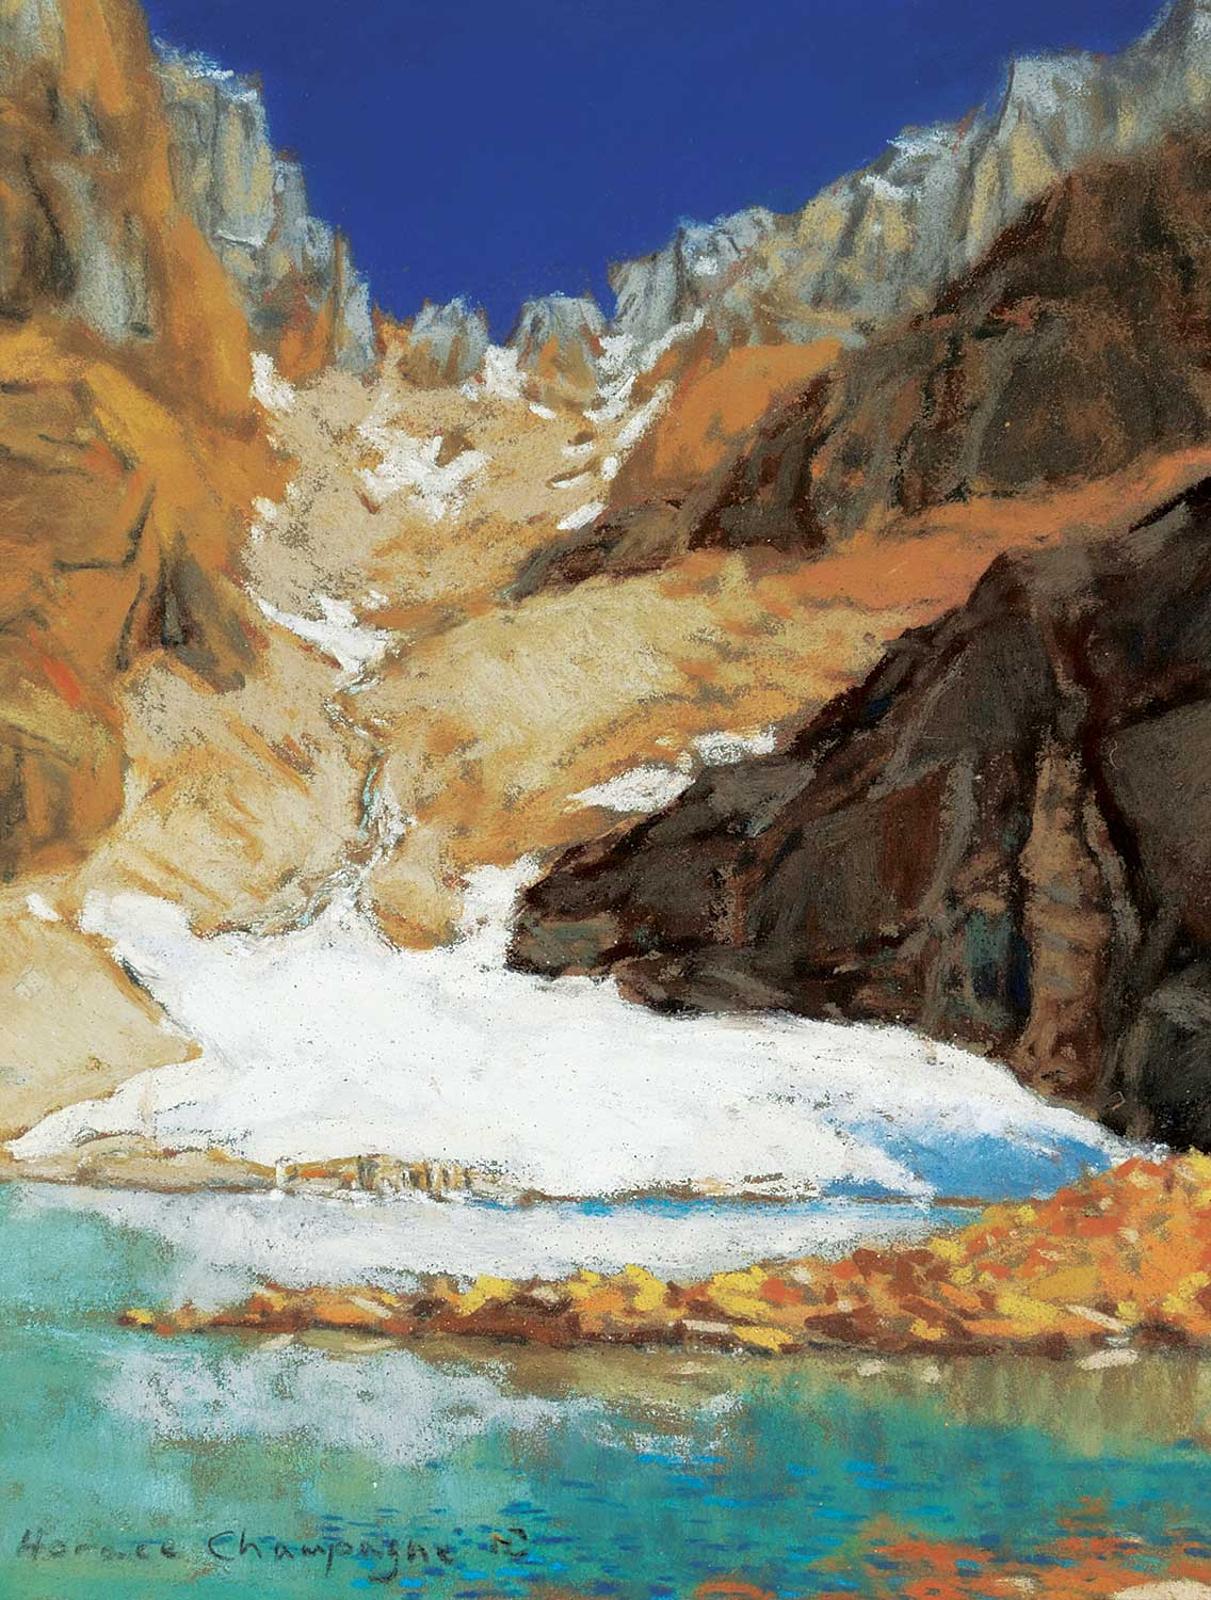 Horace Champagne (1937) - Melting Snow on Lake Oesa, Lake O'Hara, Yoho Nat. Pk. B.C.